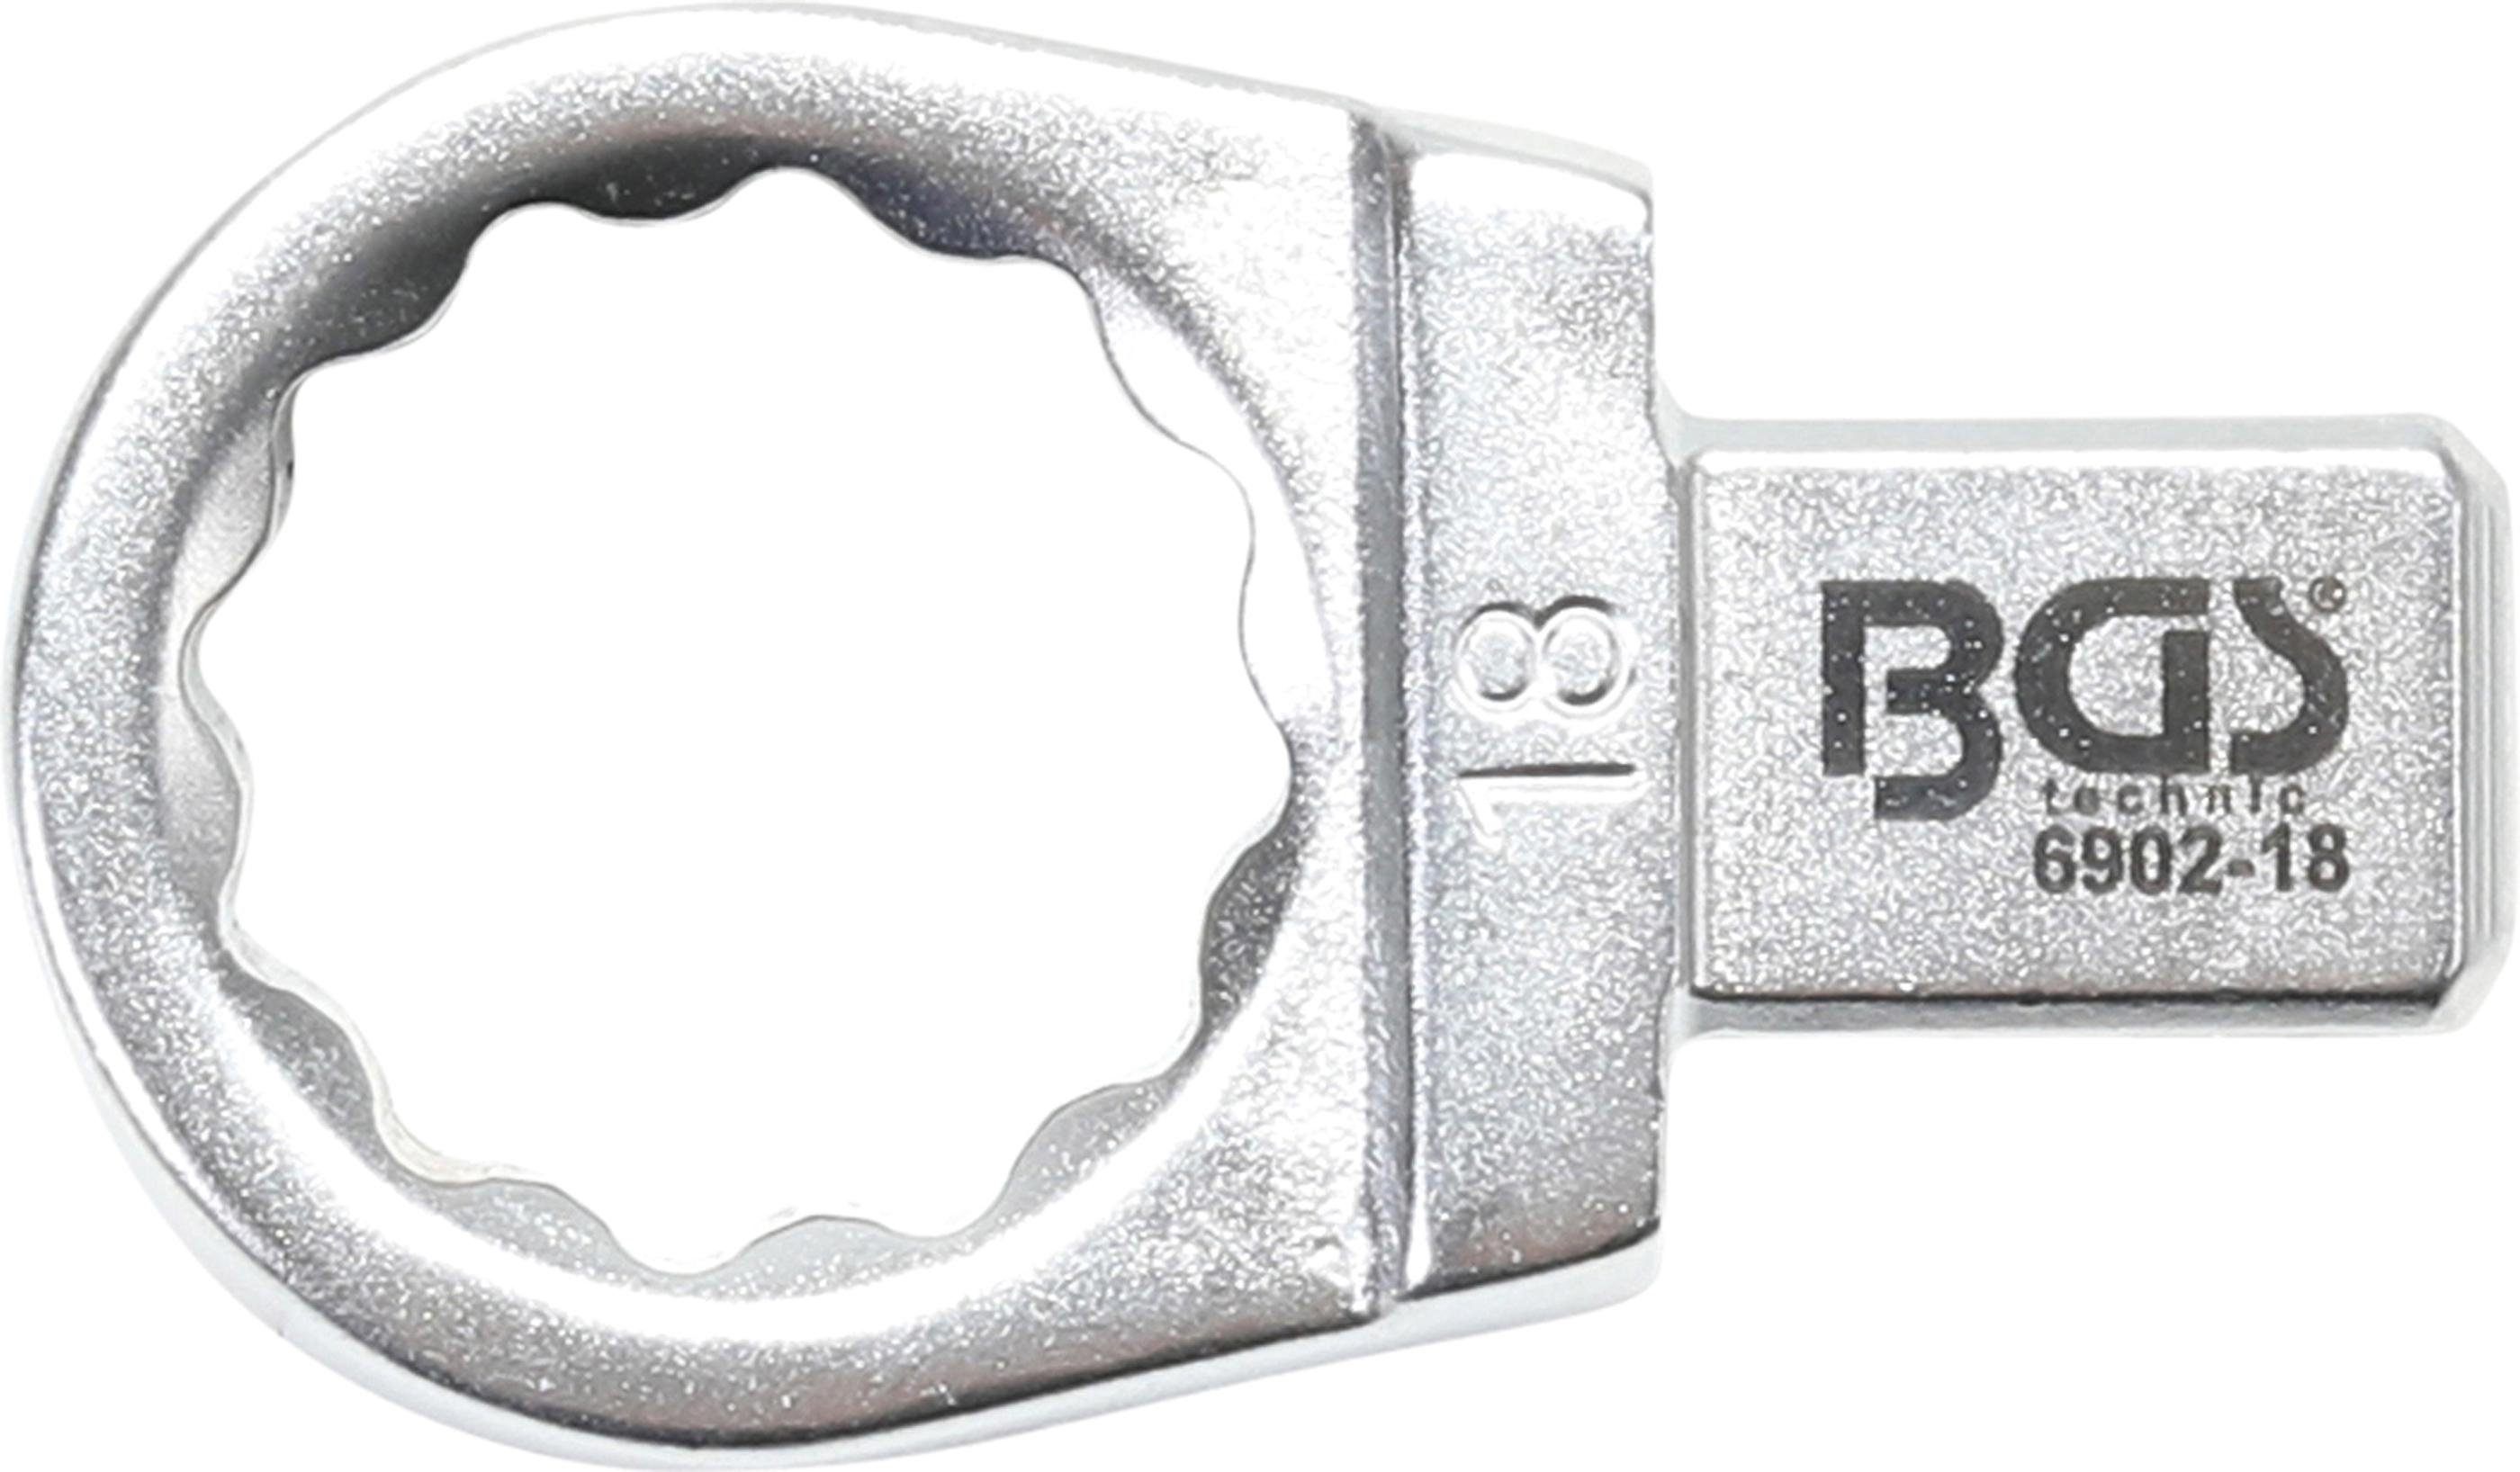 BGS technic Ausstechform Aufnahme 12 9 x mm mm, 18 Einsteck-Ringschlüssel